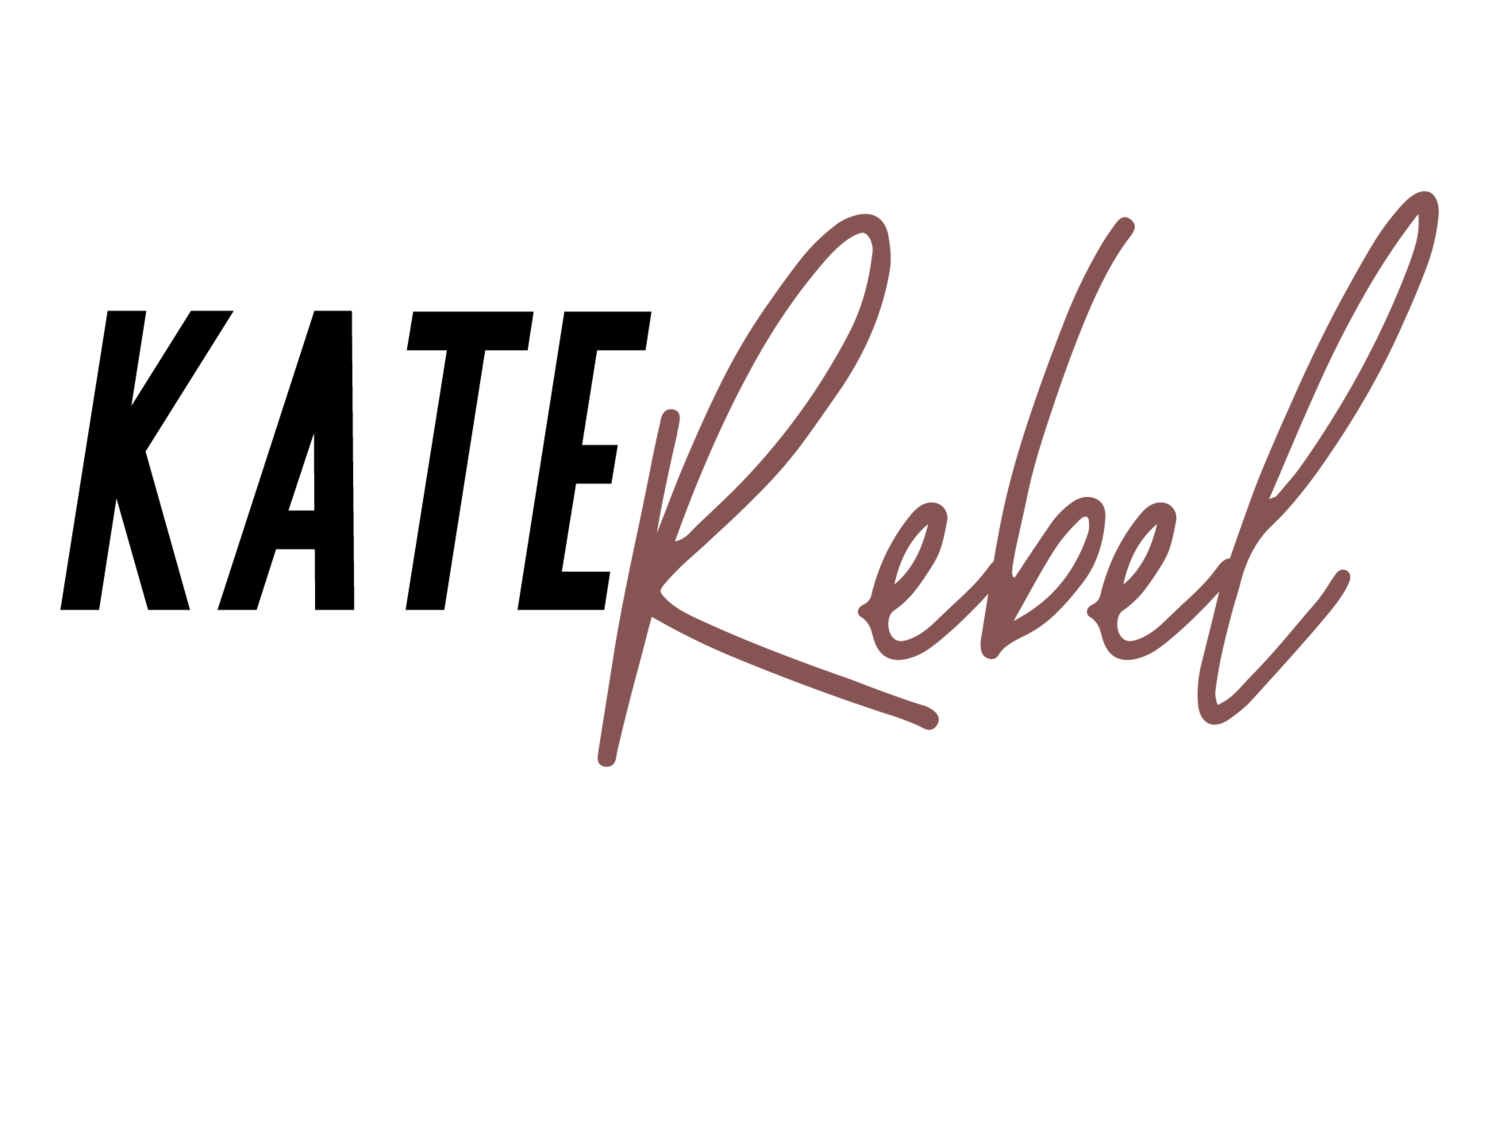 Kate Rebel